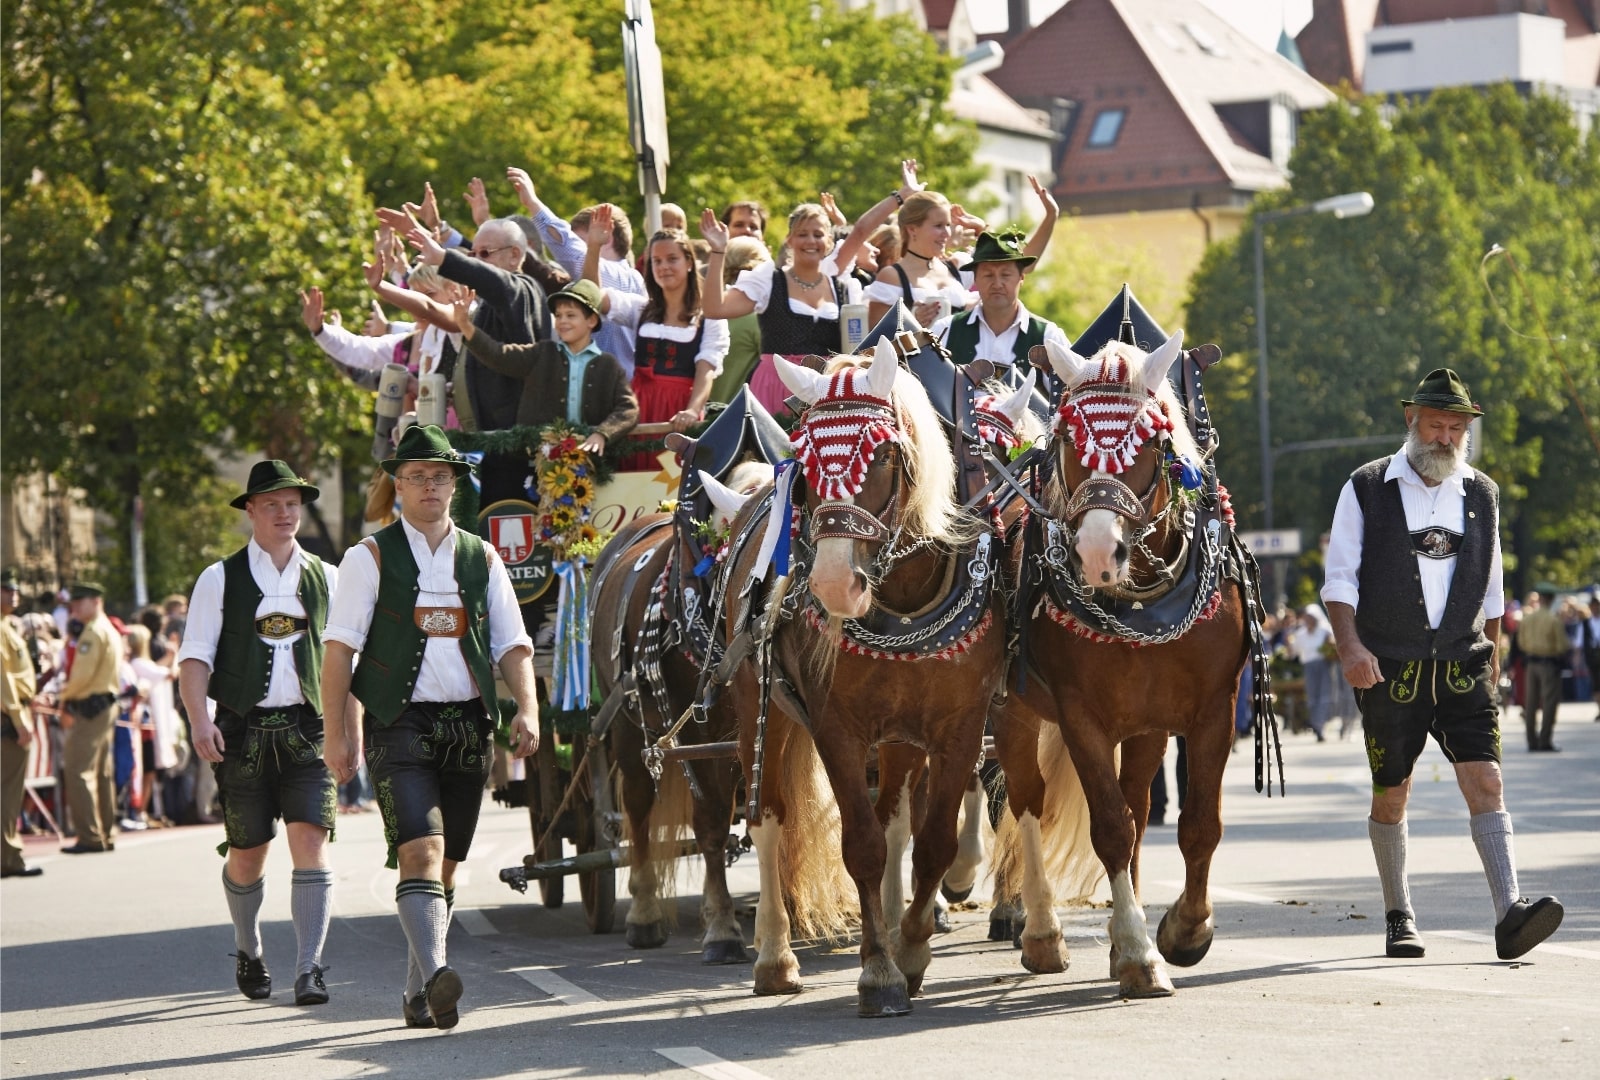 Hosts of the Oktoberfest on a horse coach